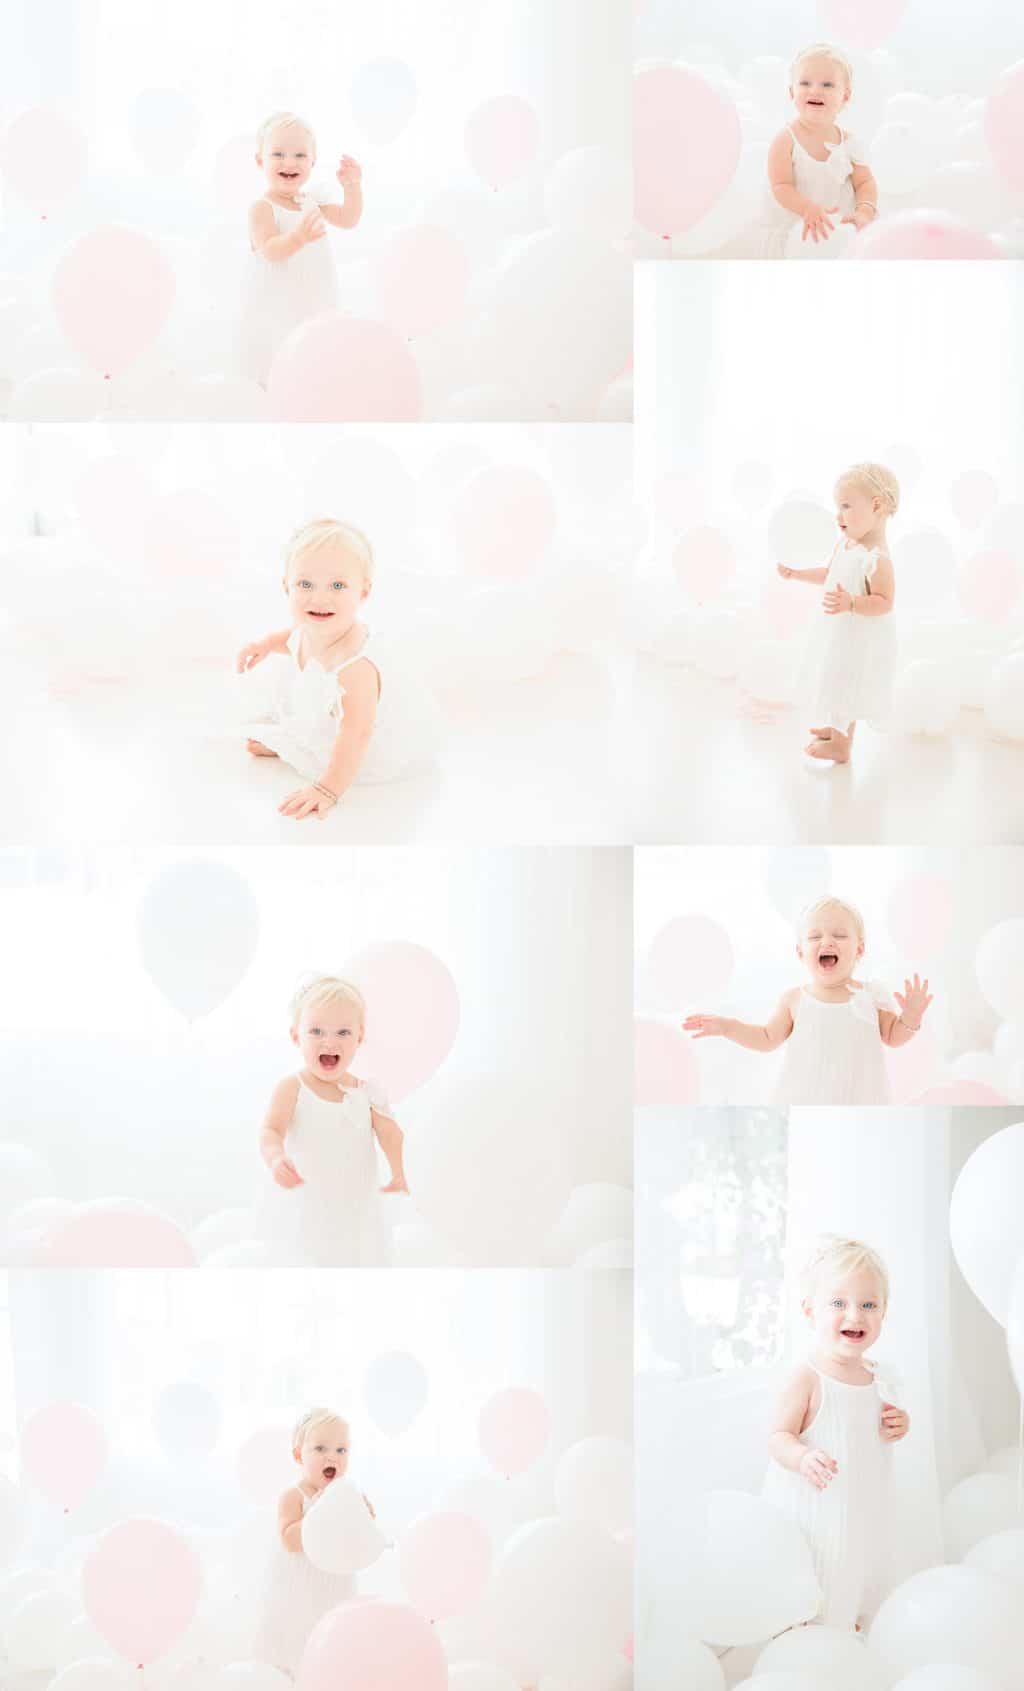 Beautiful Baby Girl's first years baby plan in Jupiter Florida newborn and baby photography studio.